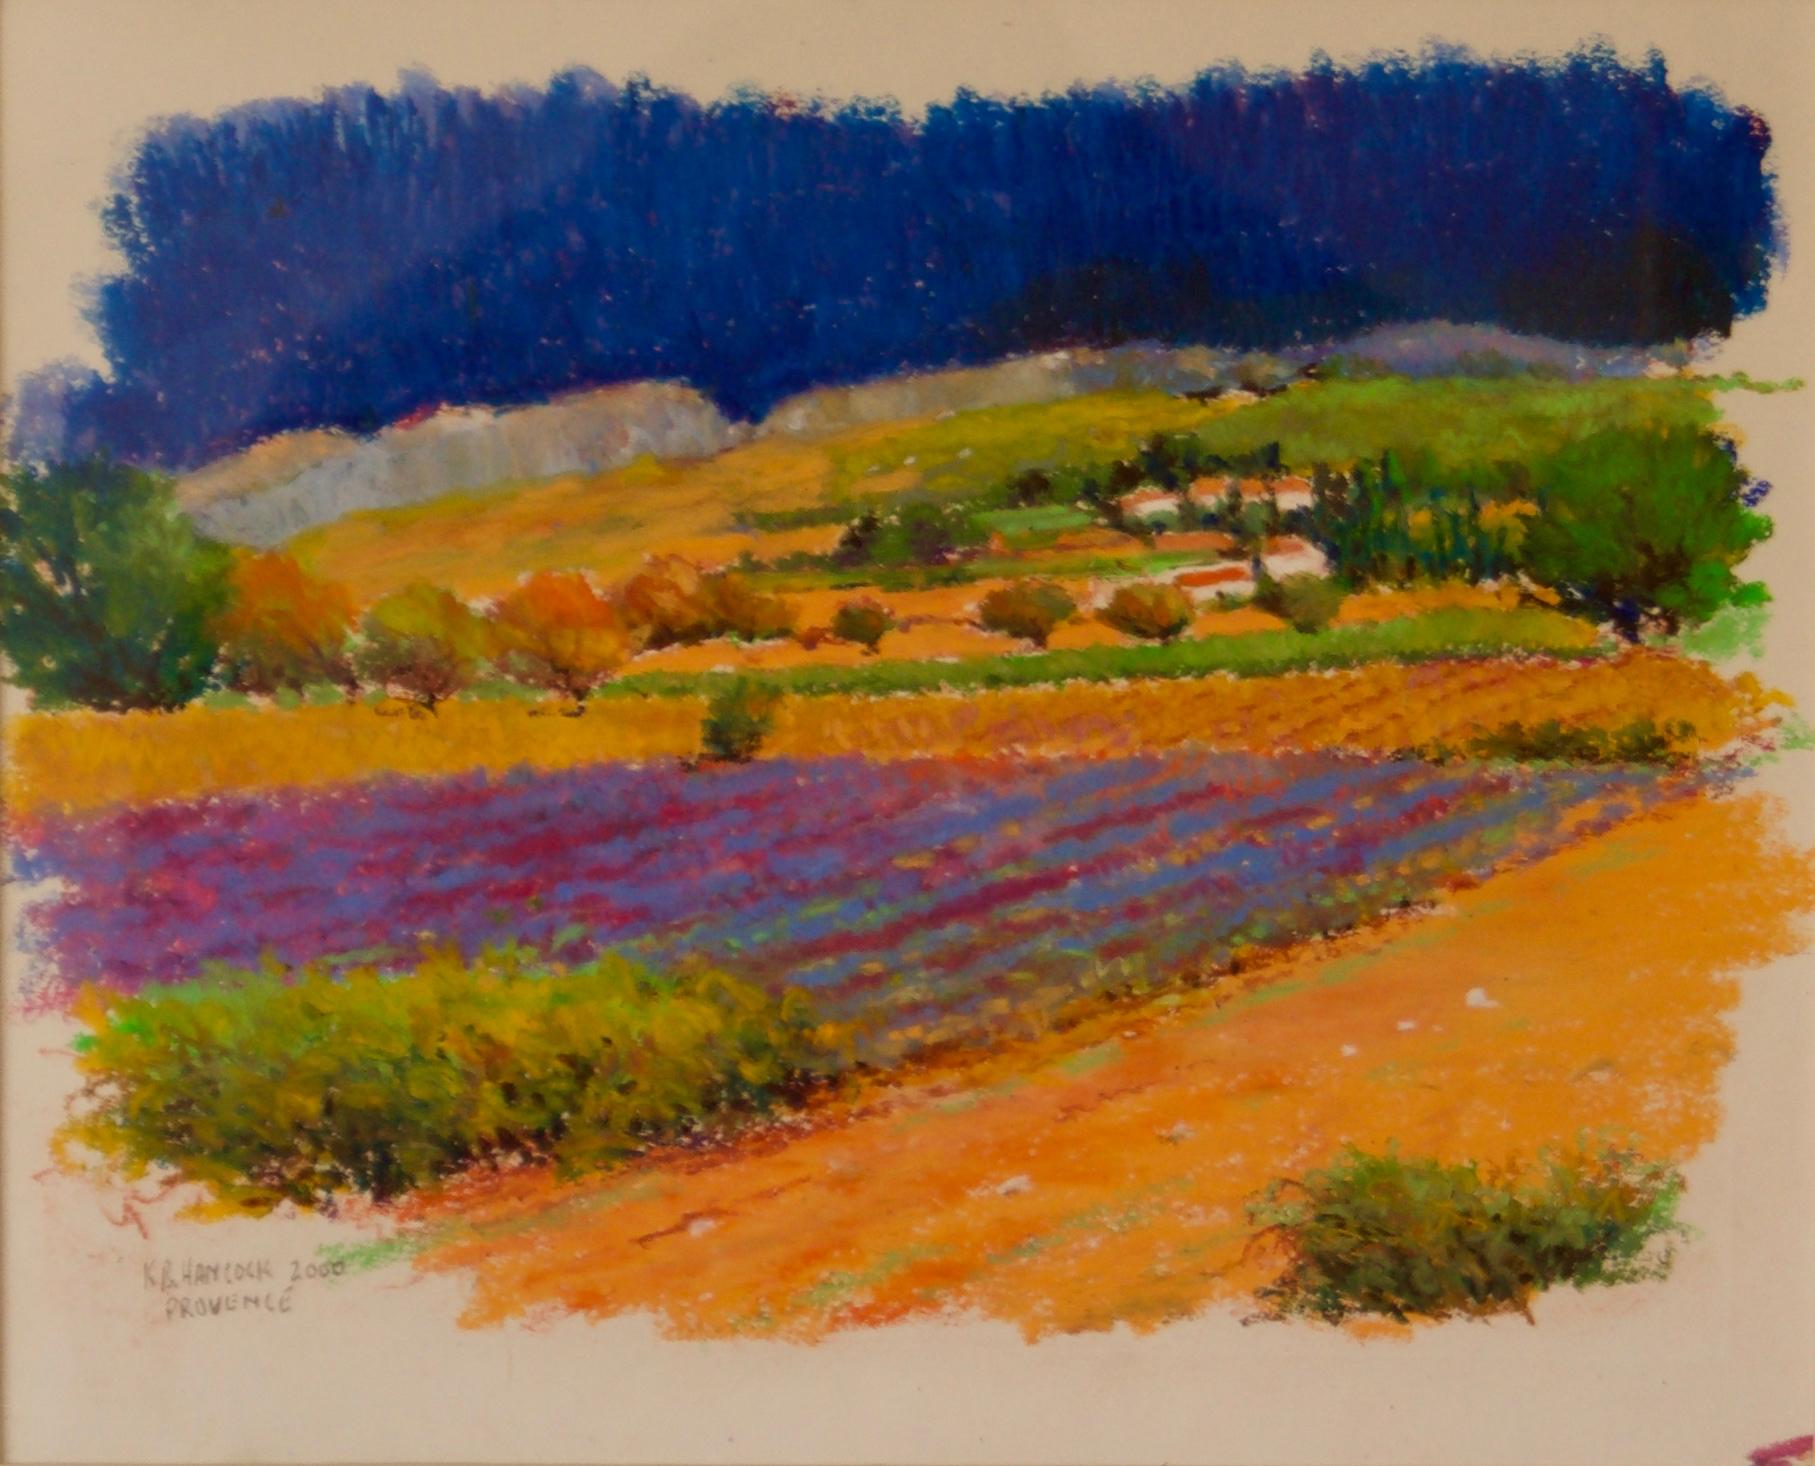 K.B. Hancock Landscape Painting - Provence South of France - Early 21st Century Landscape Oil Pastel by Hancock